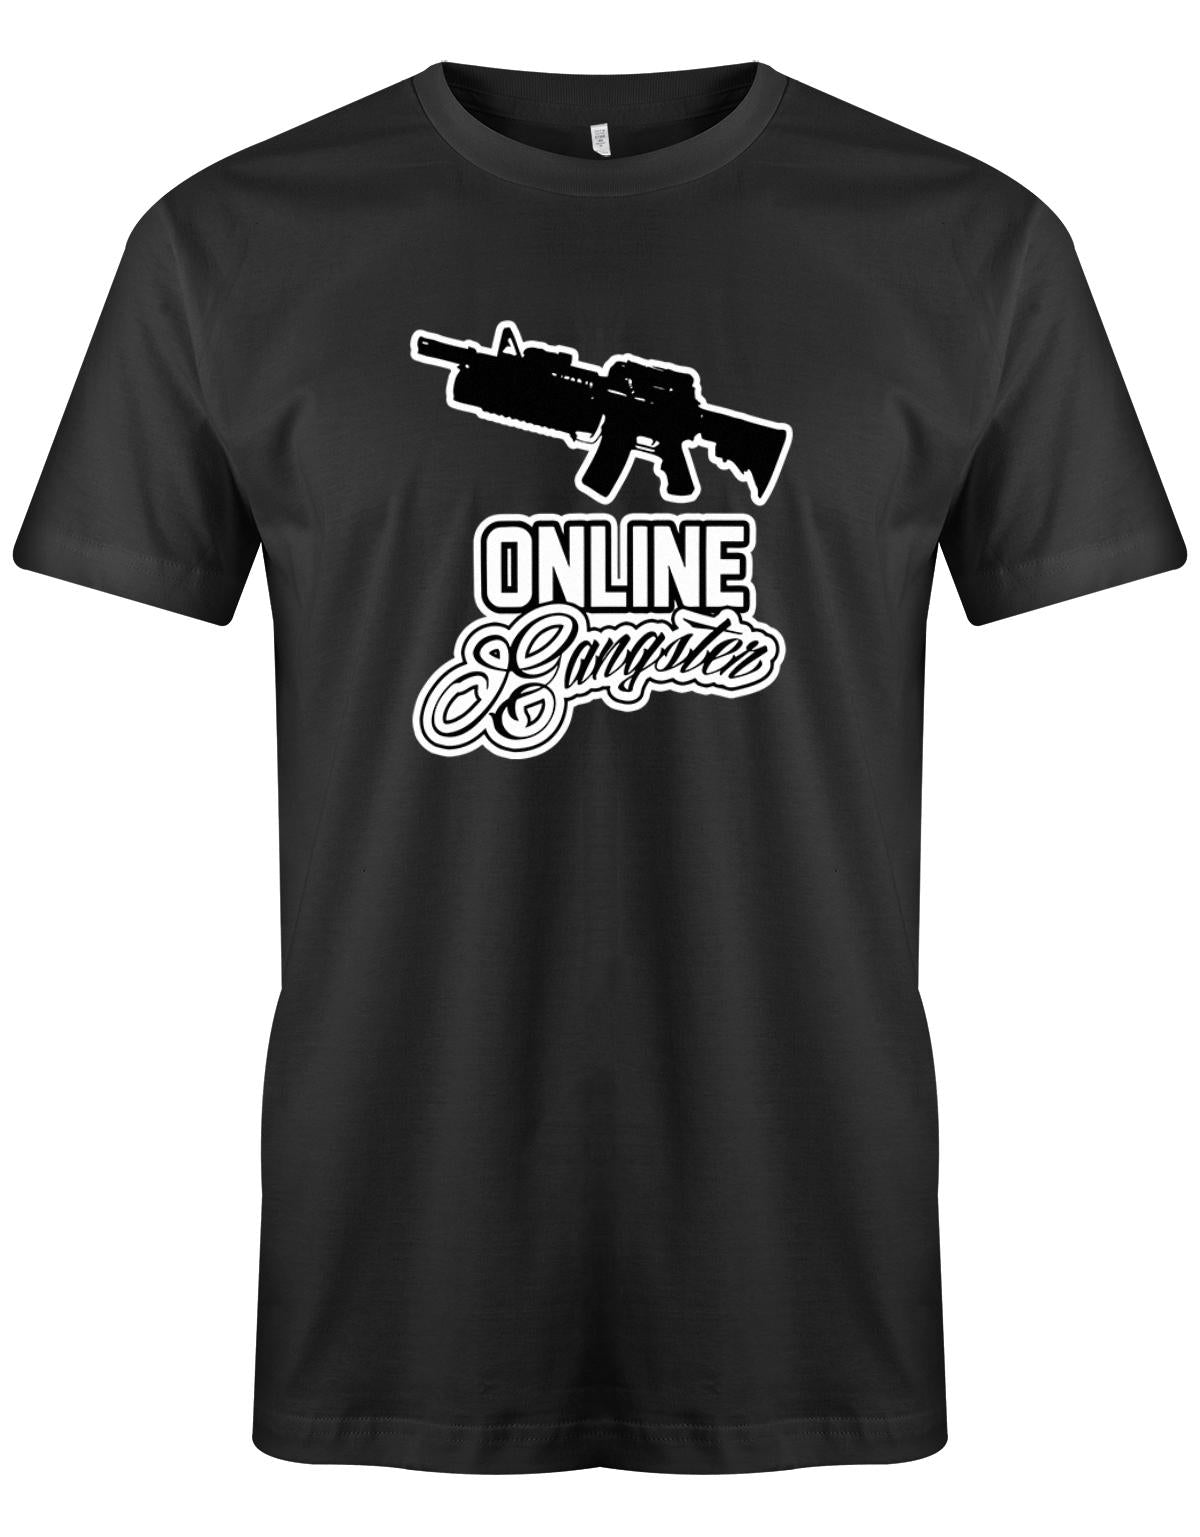 Online-Gangster-Herren-Shirt-Schwarz